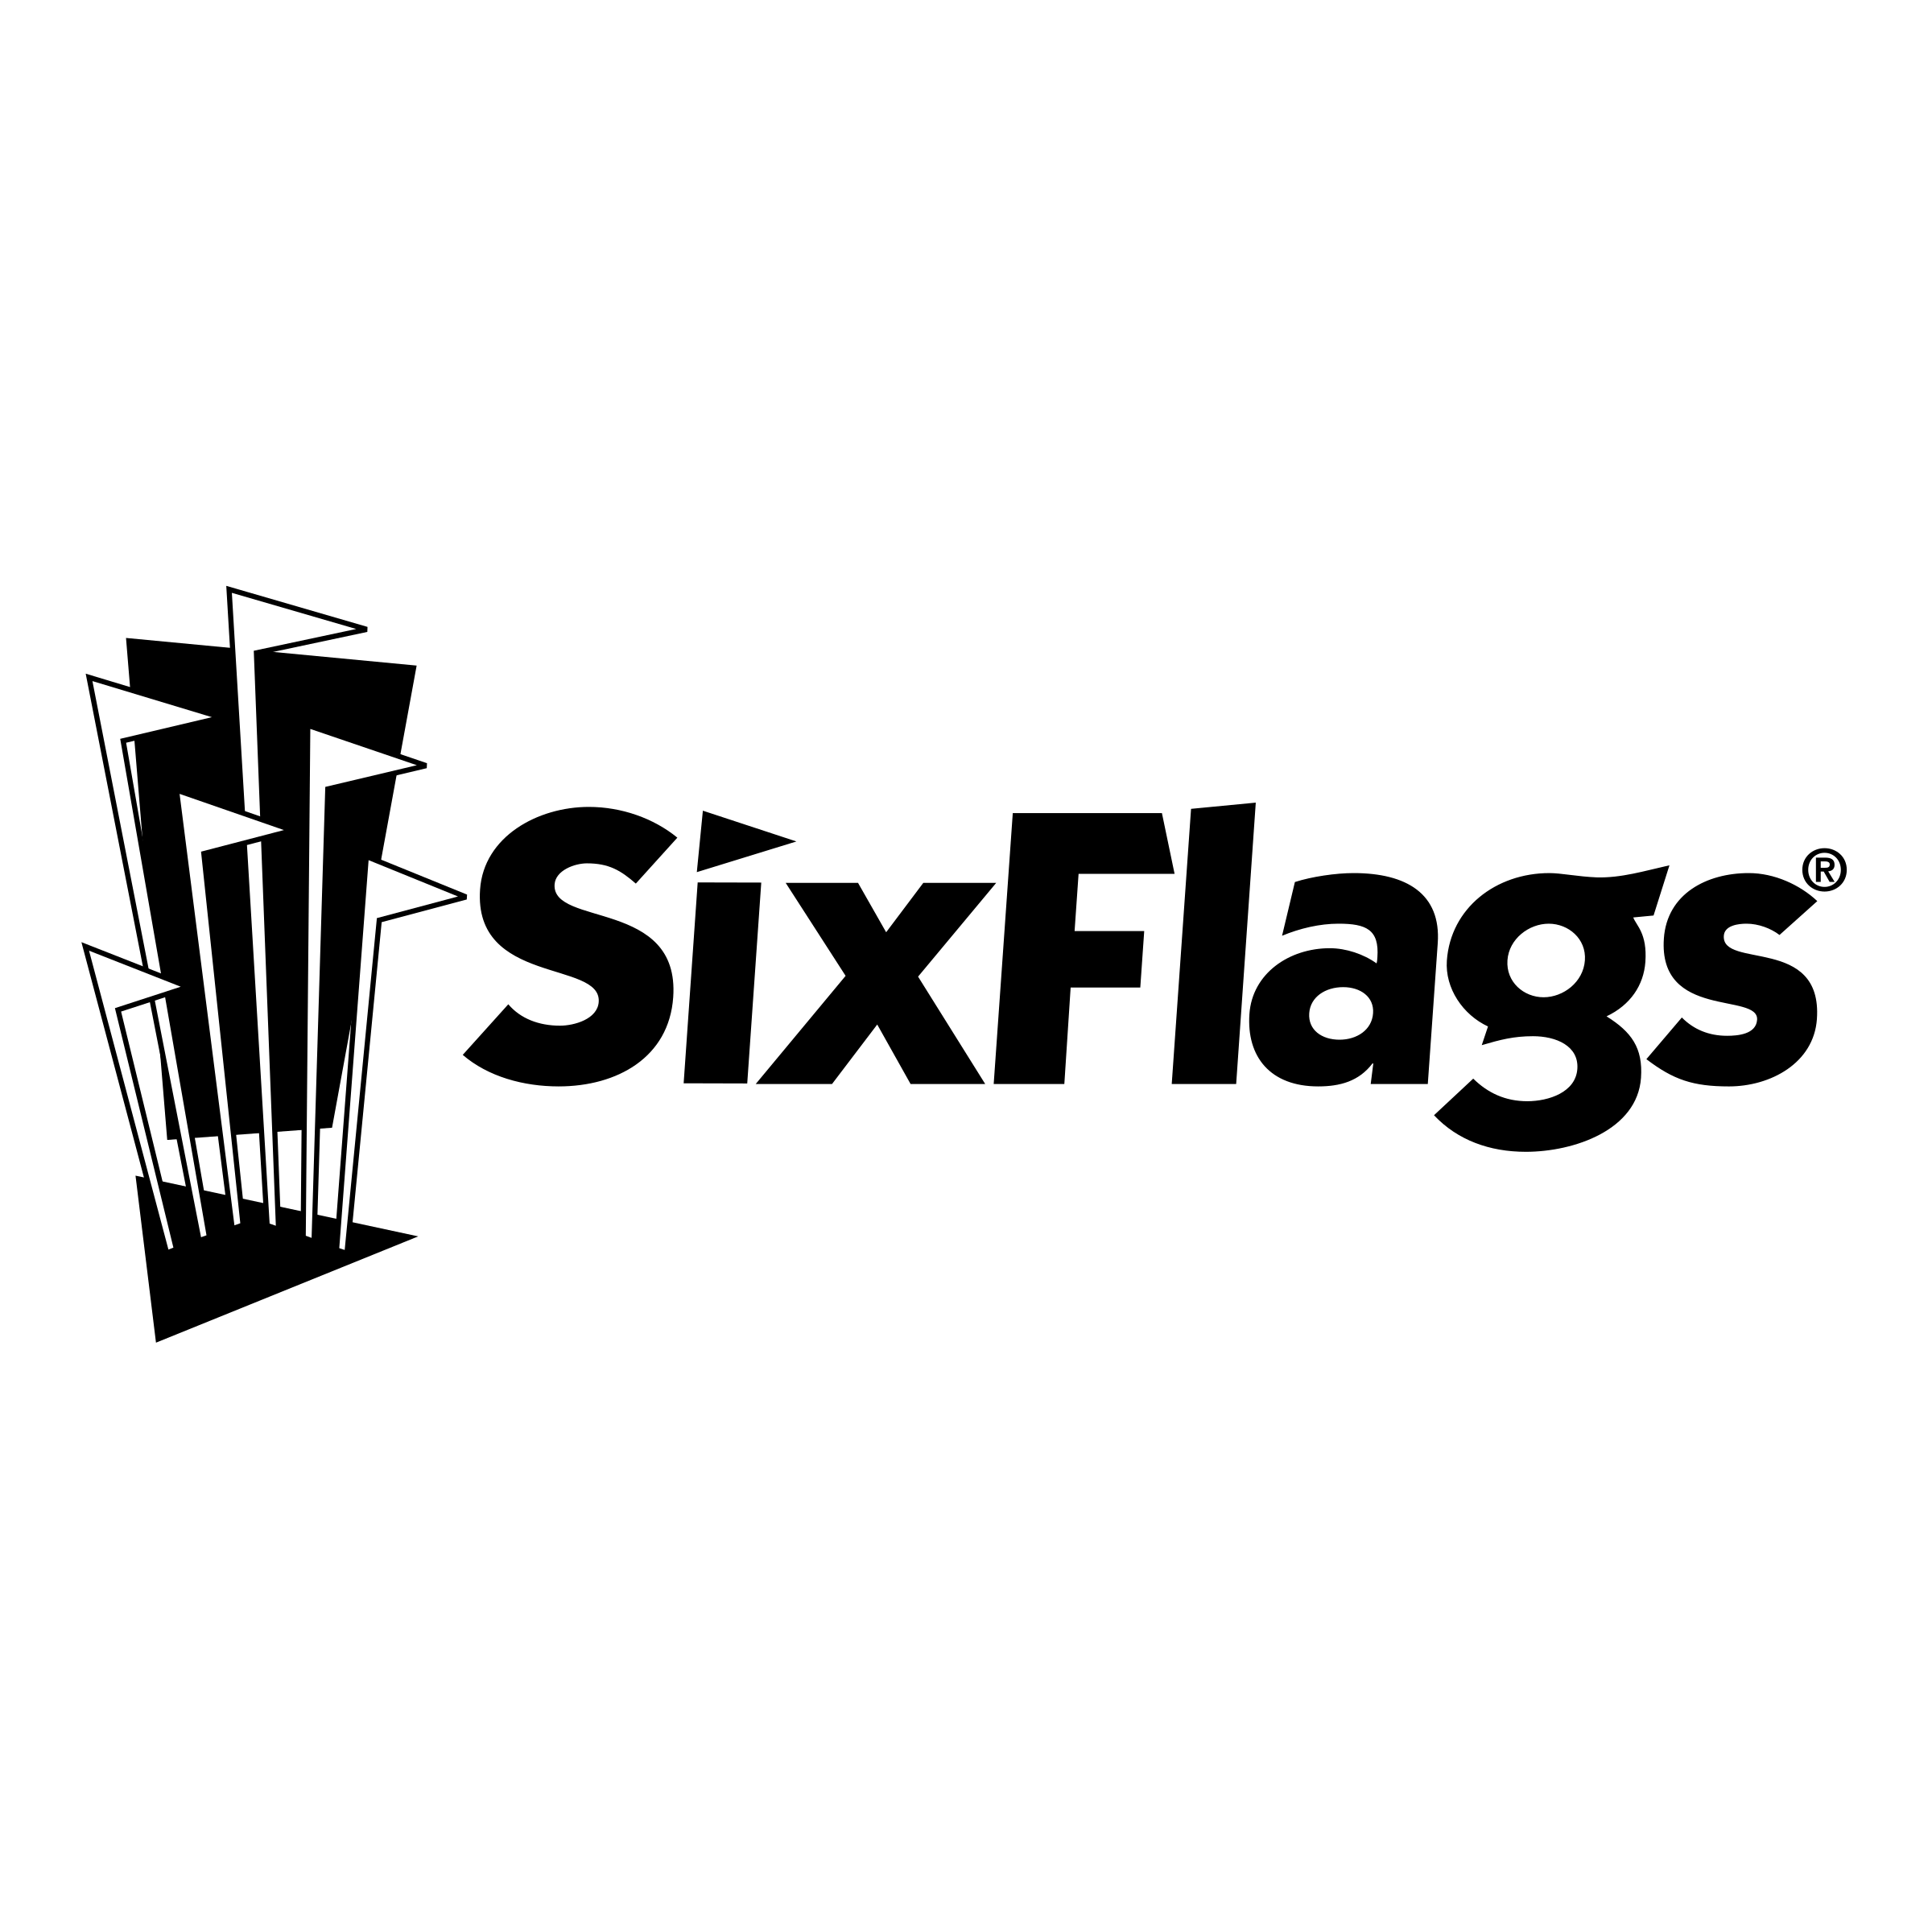 Six Logo - Six Flags Logo PNG Transparent & SVG Vector